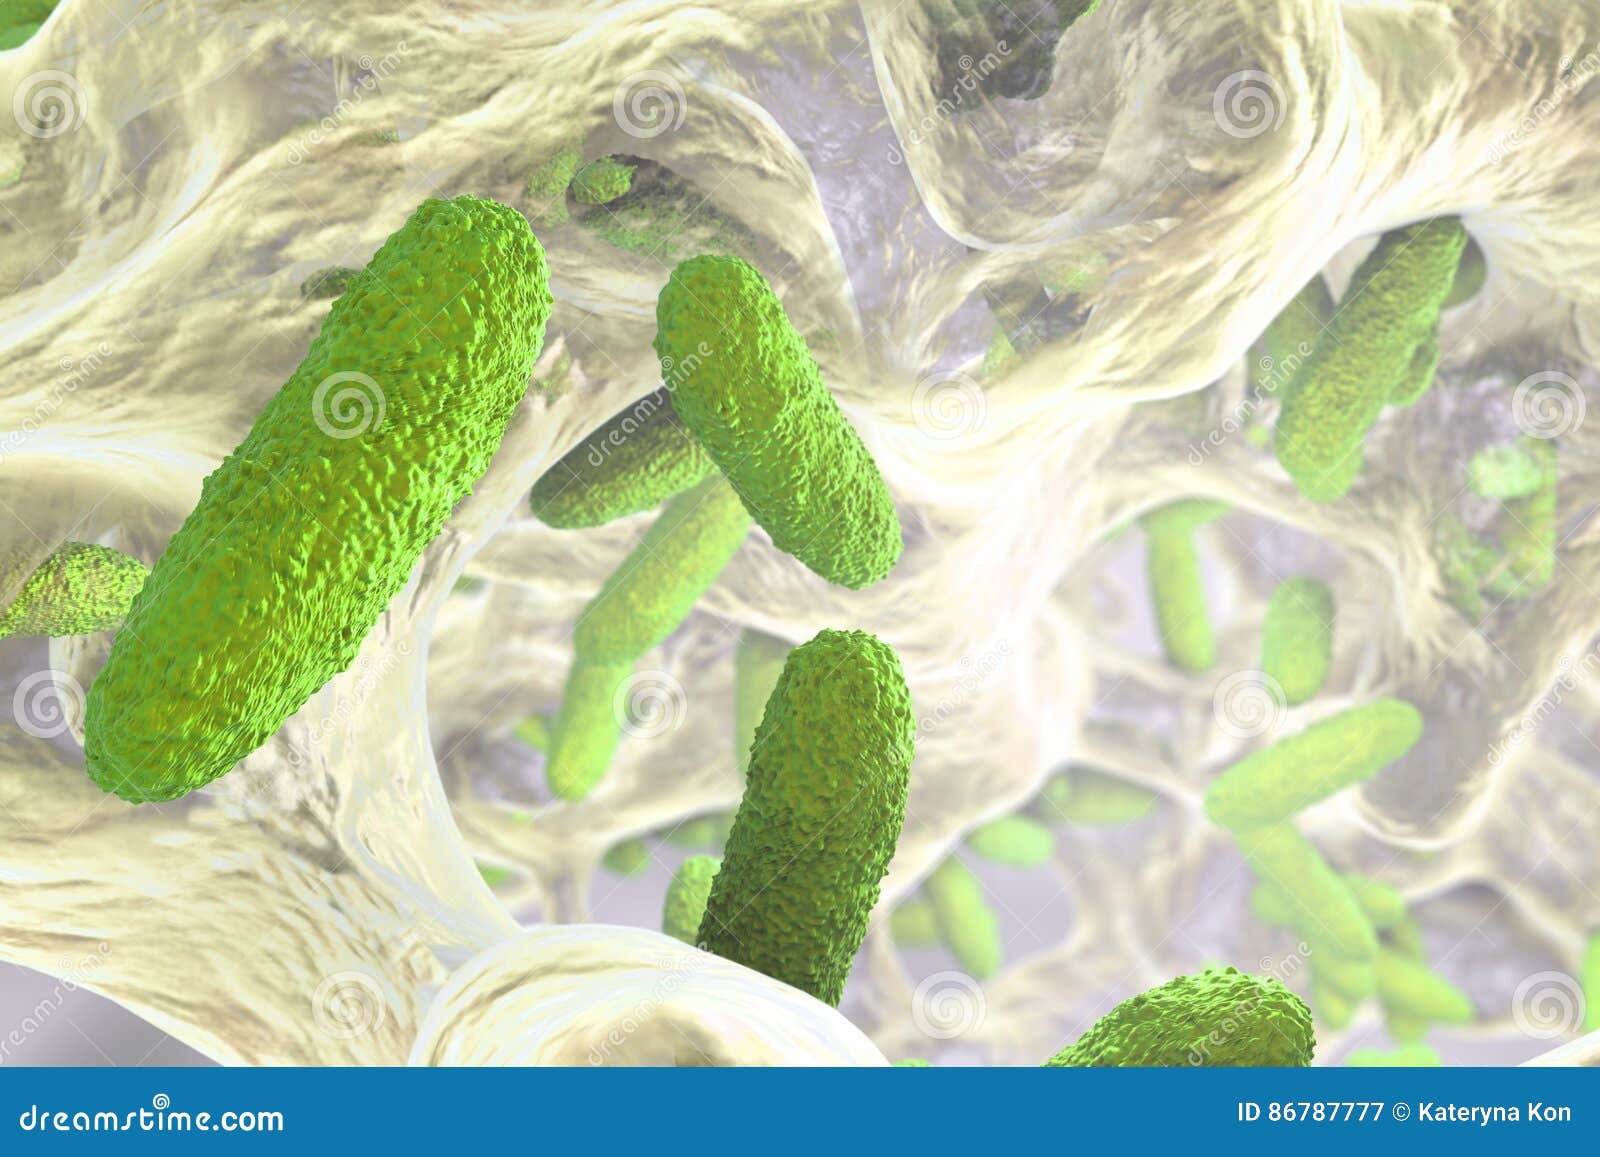 biofilm of klebsiella bacteria